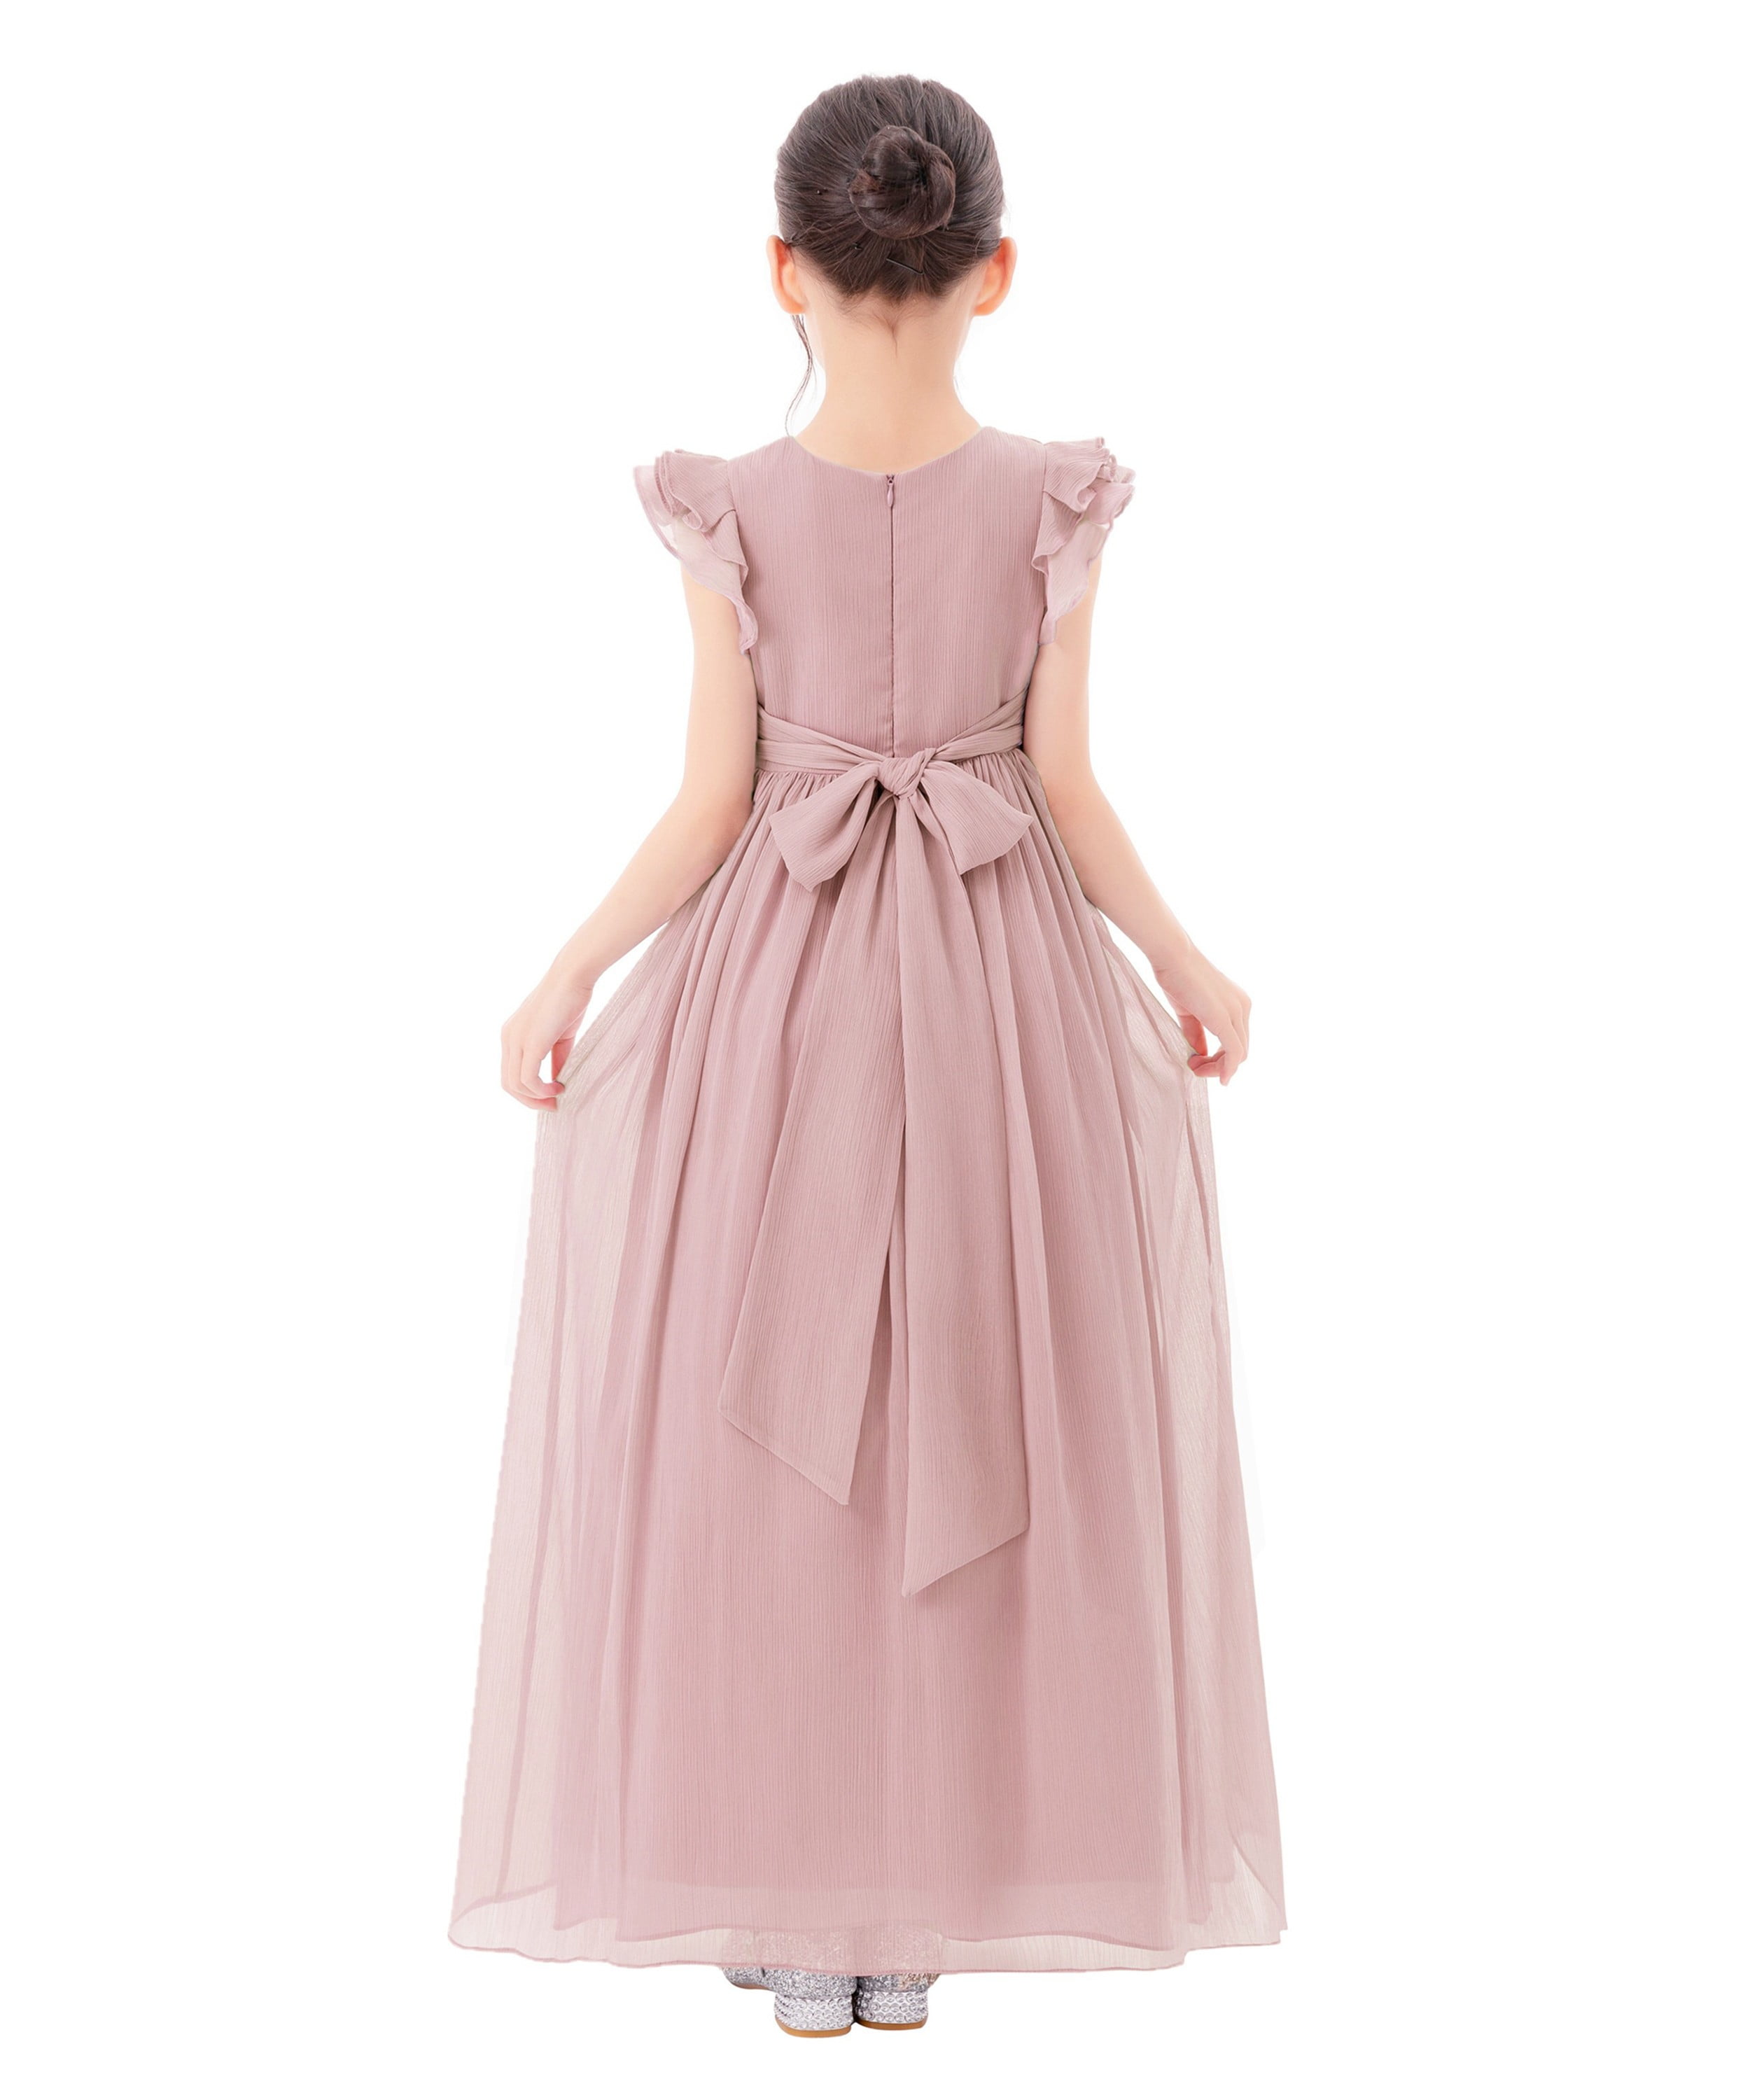 Ekidsbridal Ruffle Chiffon Flower Girl Dresses for Princess Pageants  Graduation Ceremonial Gown 822 6 